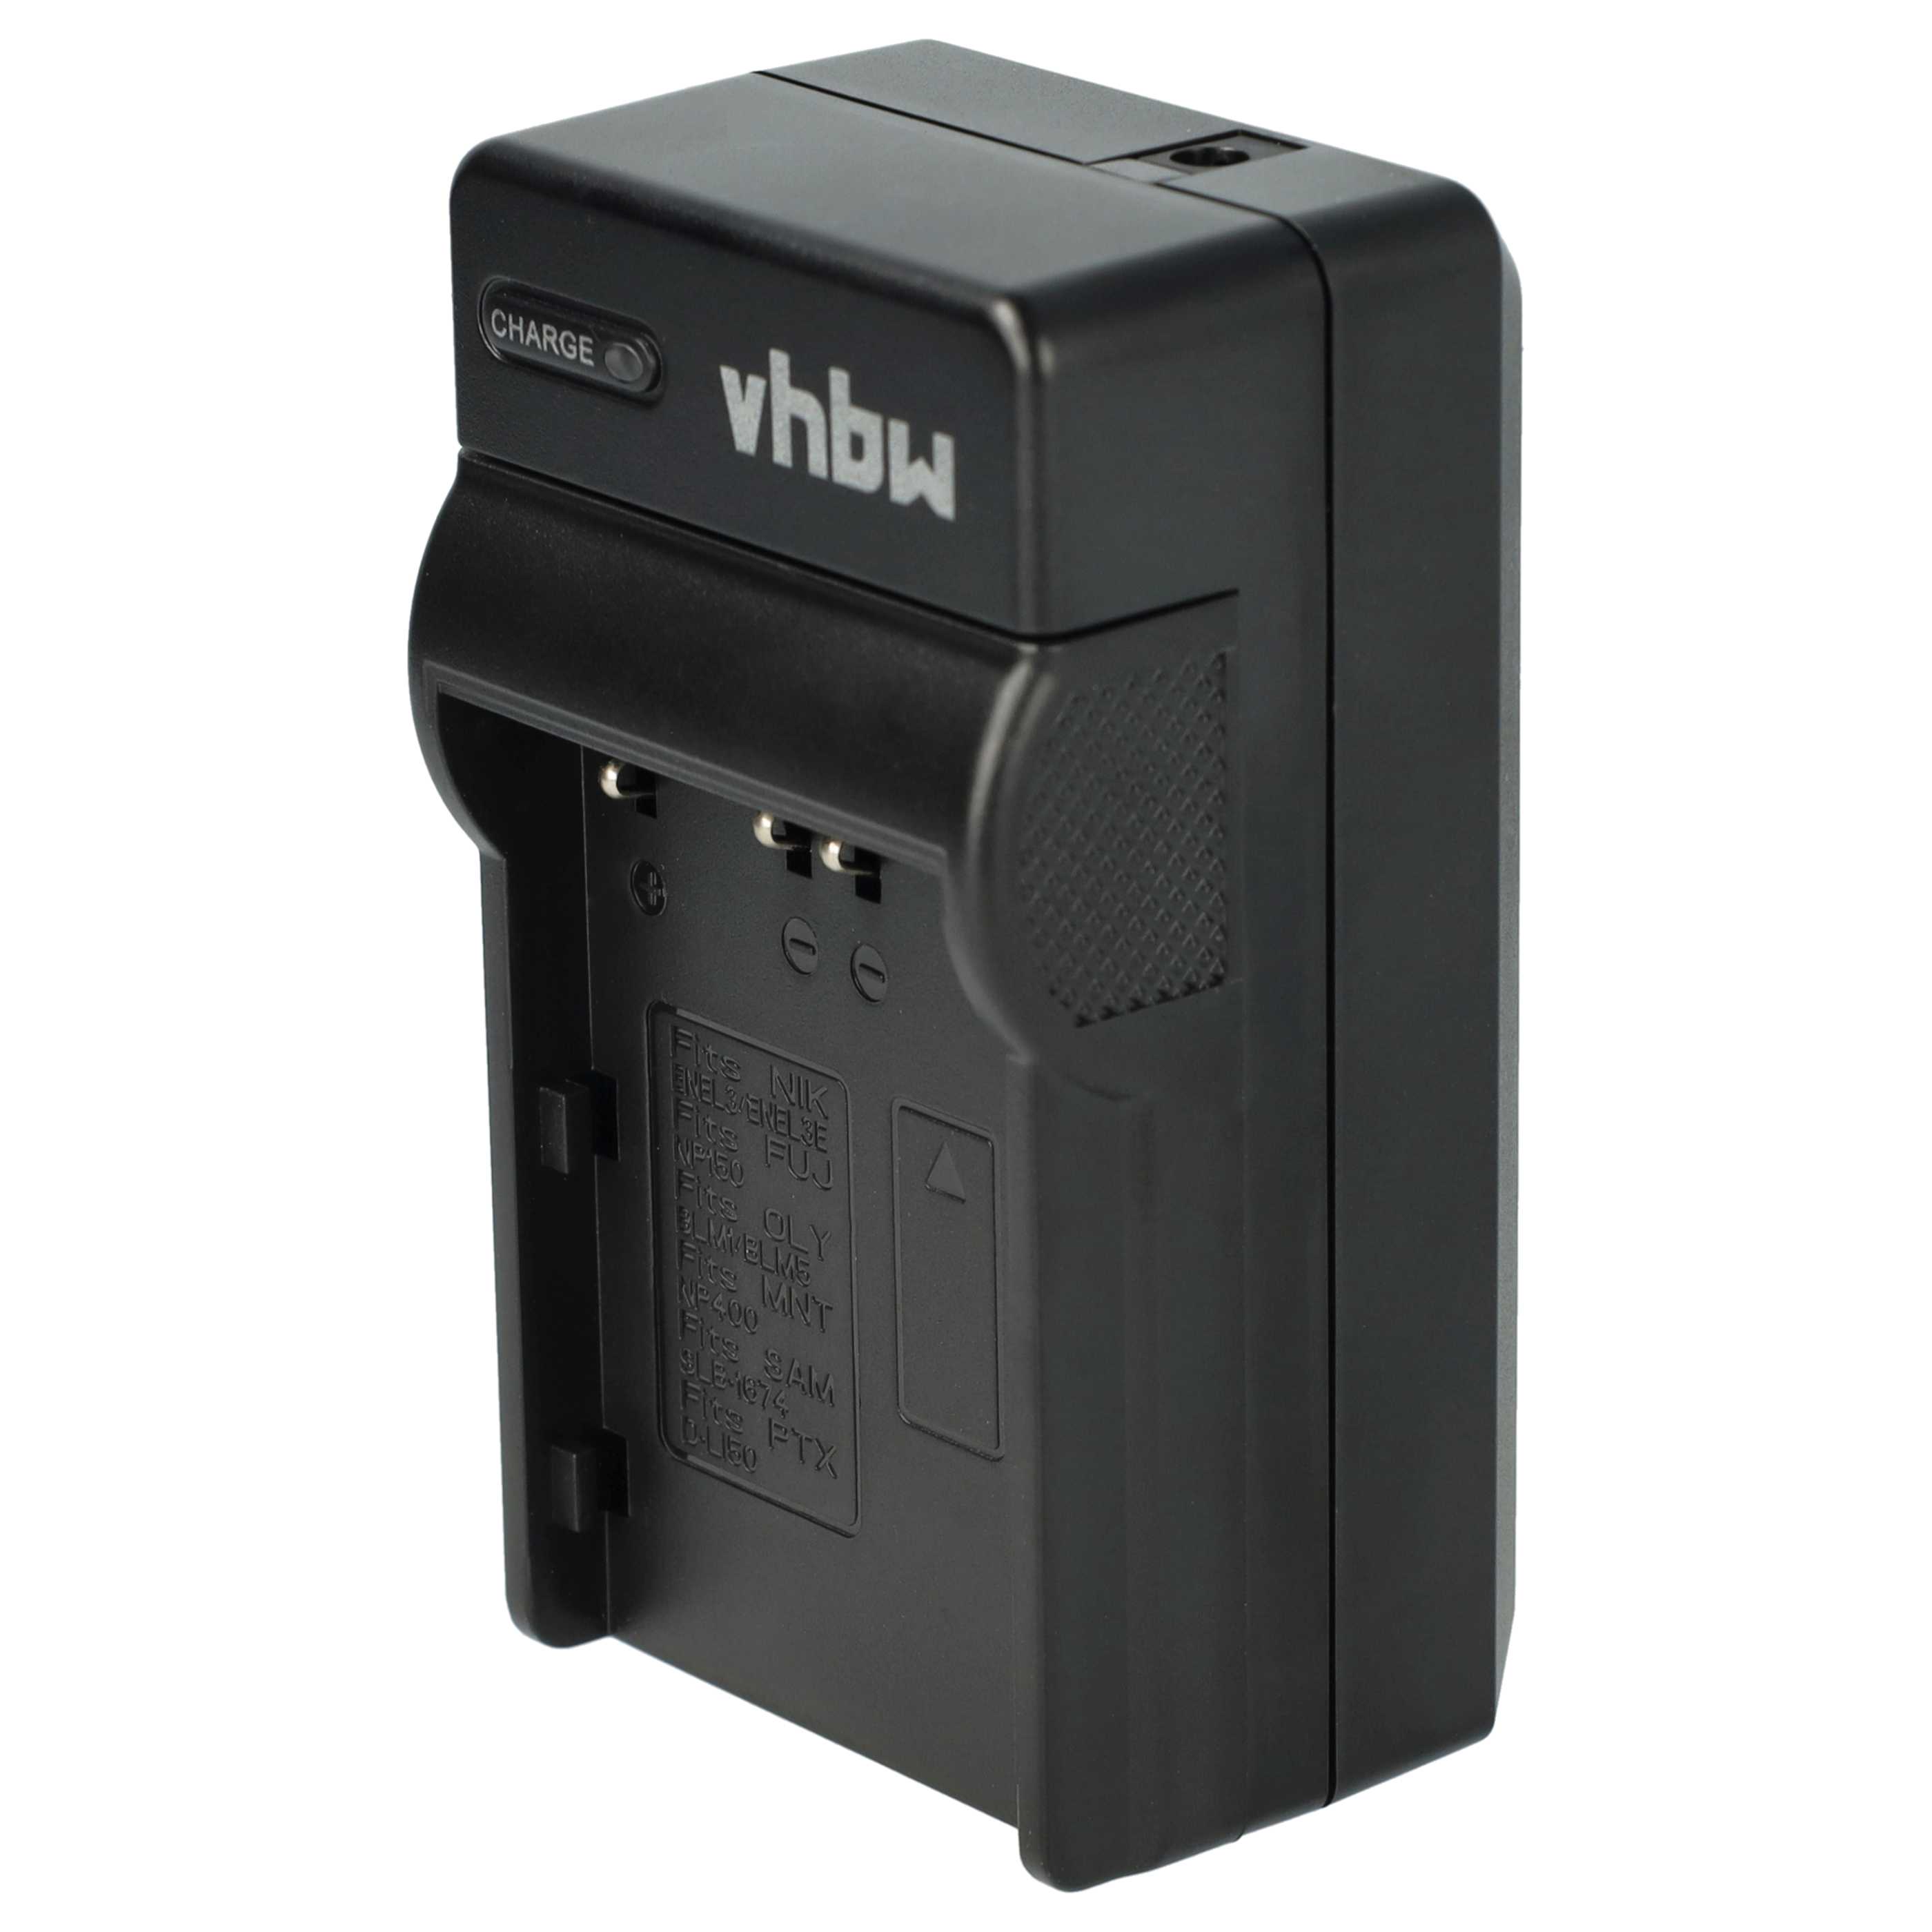 Akku Ladegerät passend für D50 Kamera u.a. - 0,6 A, 8,4 V